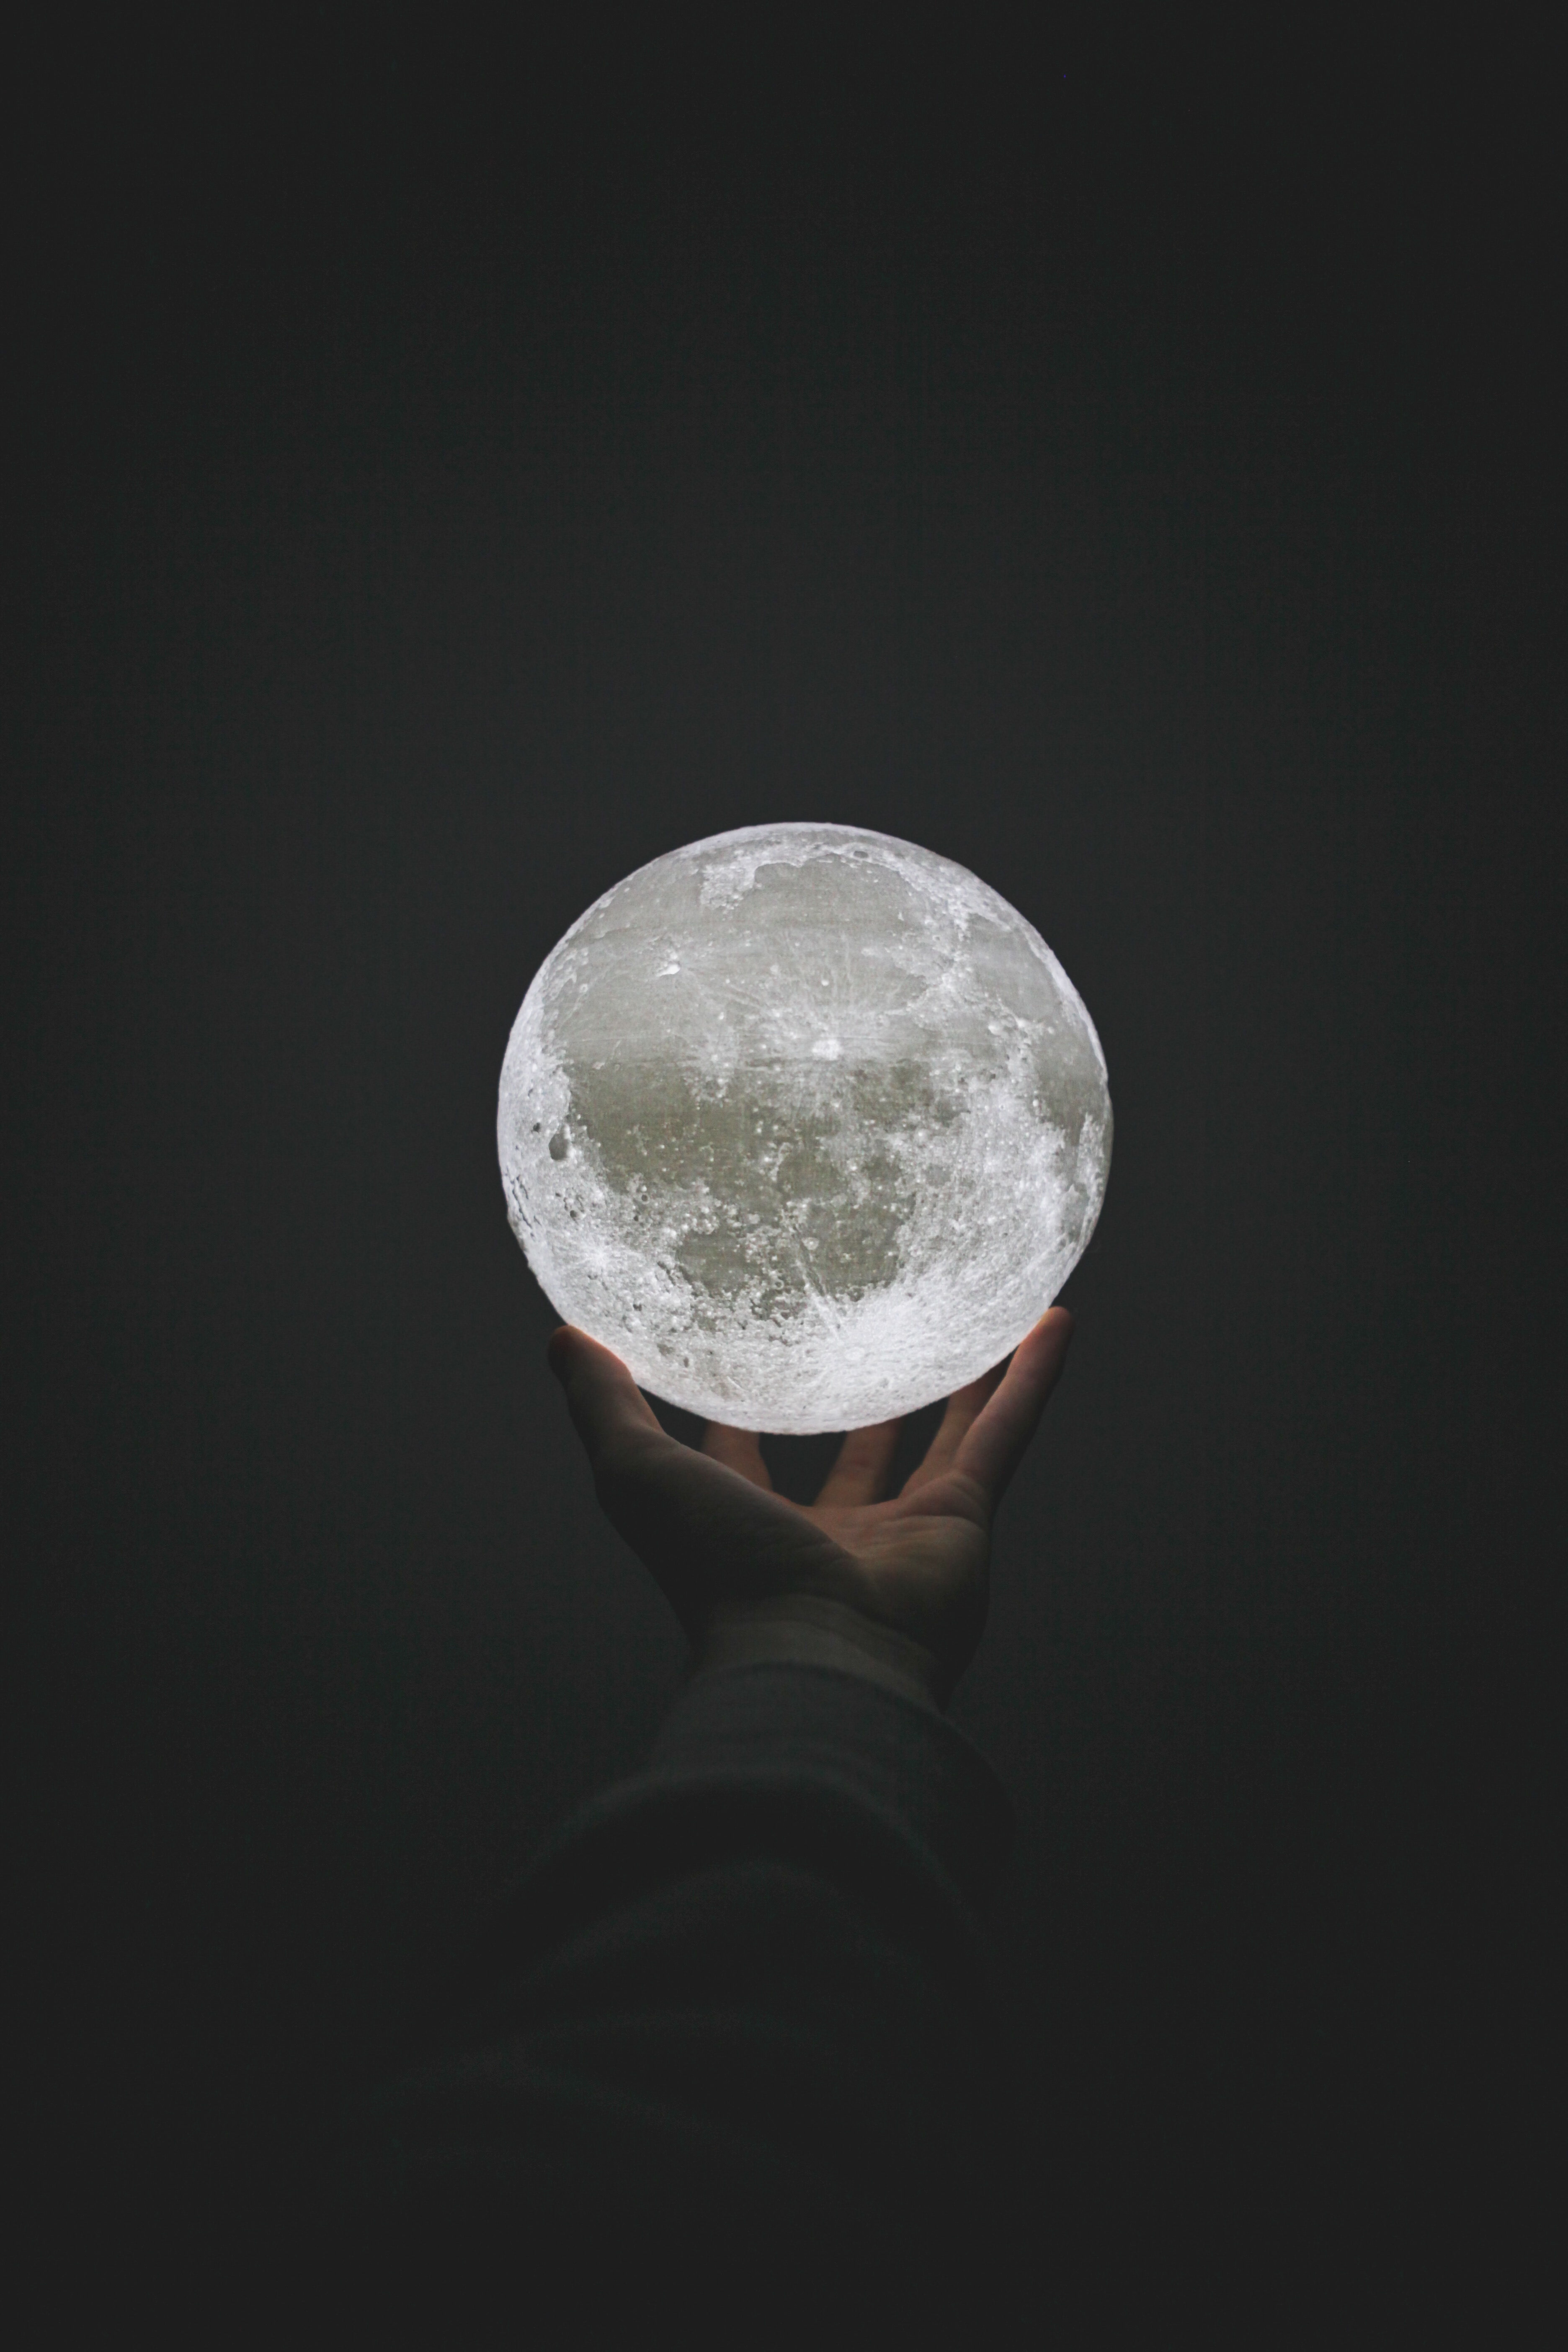 sphere, hand, dark, moon, ball, glow wallpaper for mobile